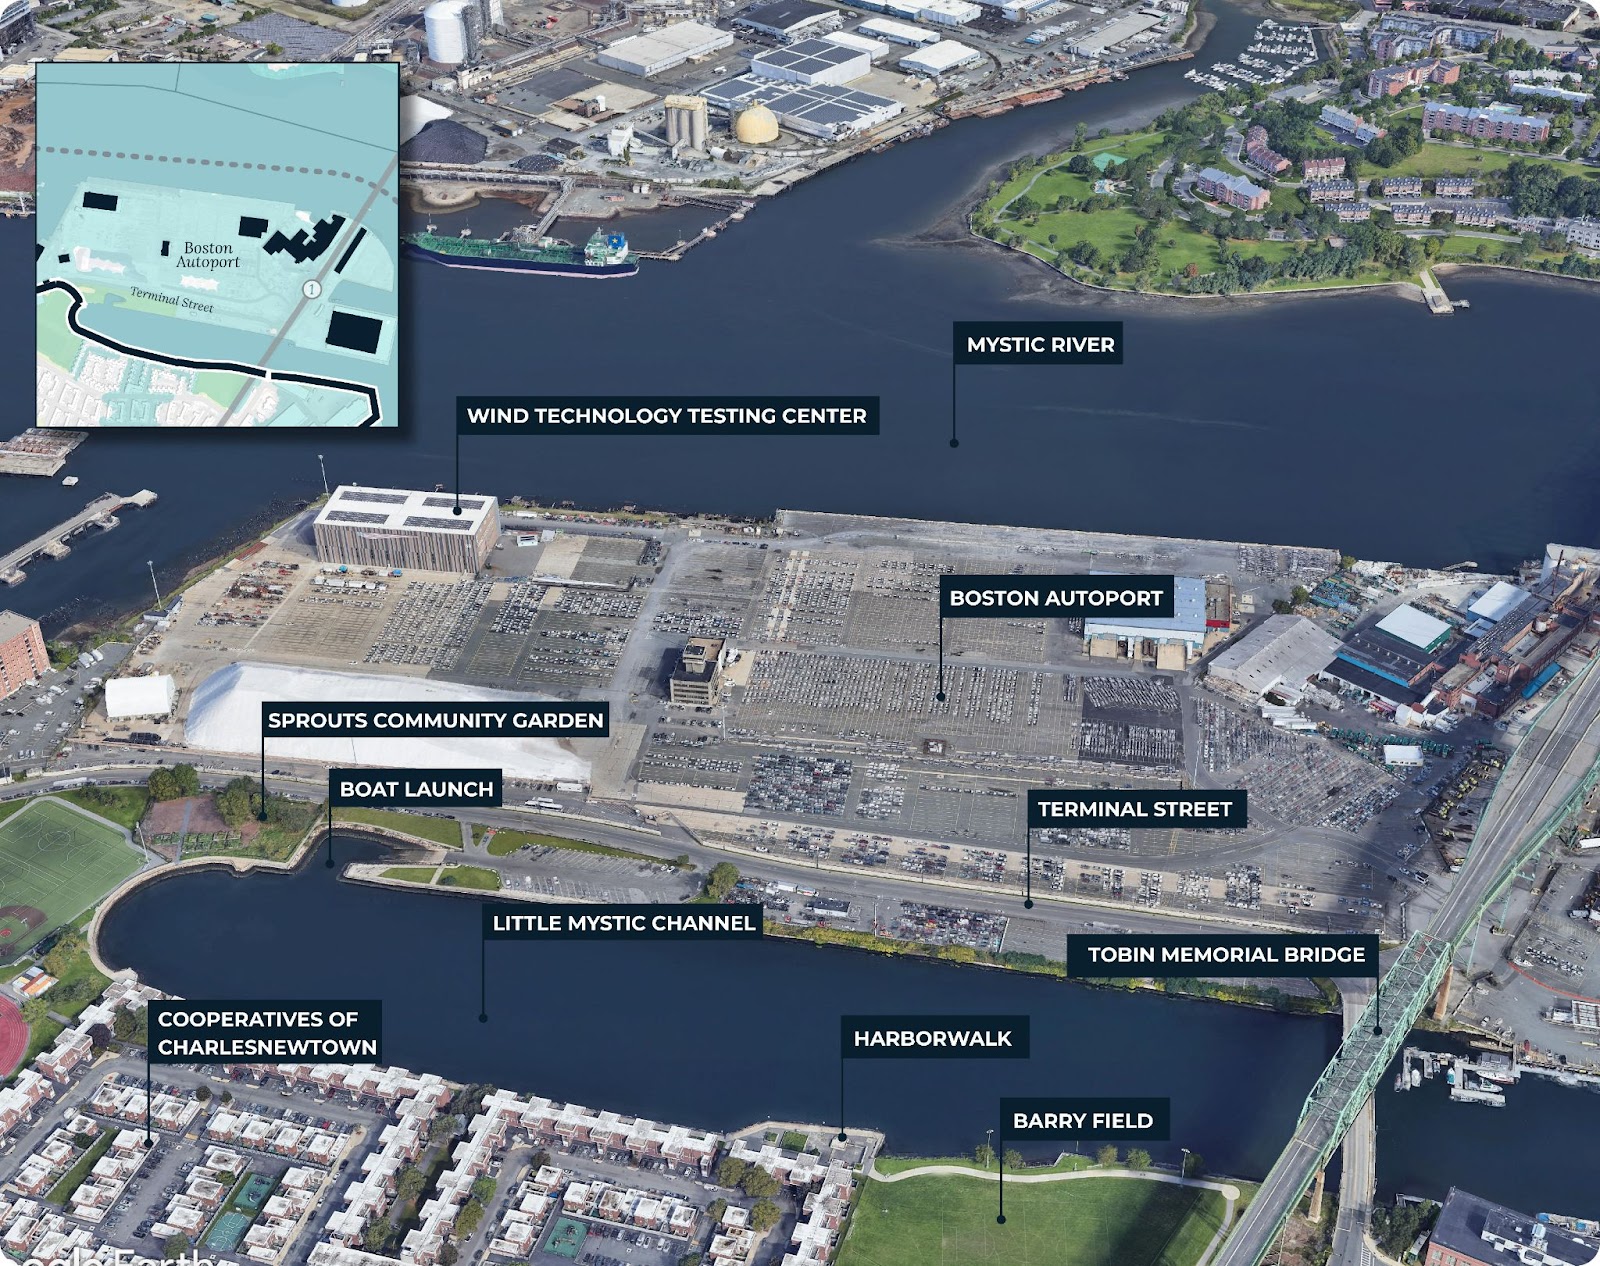 Terminal Street Boston Autoport Aerial Map